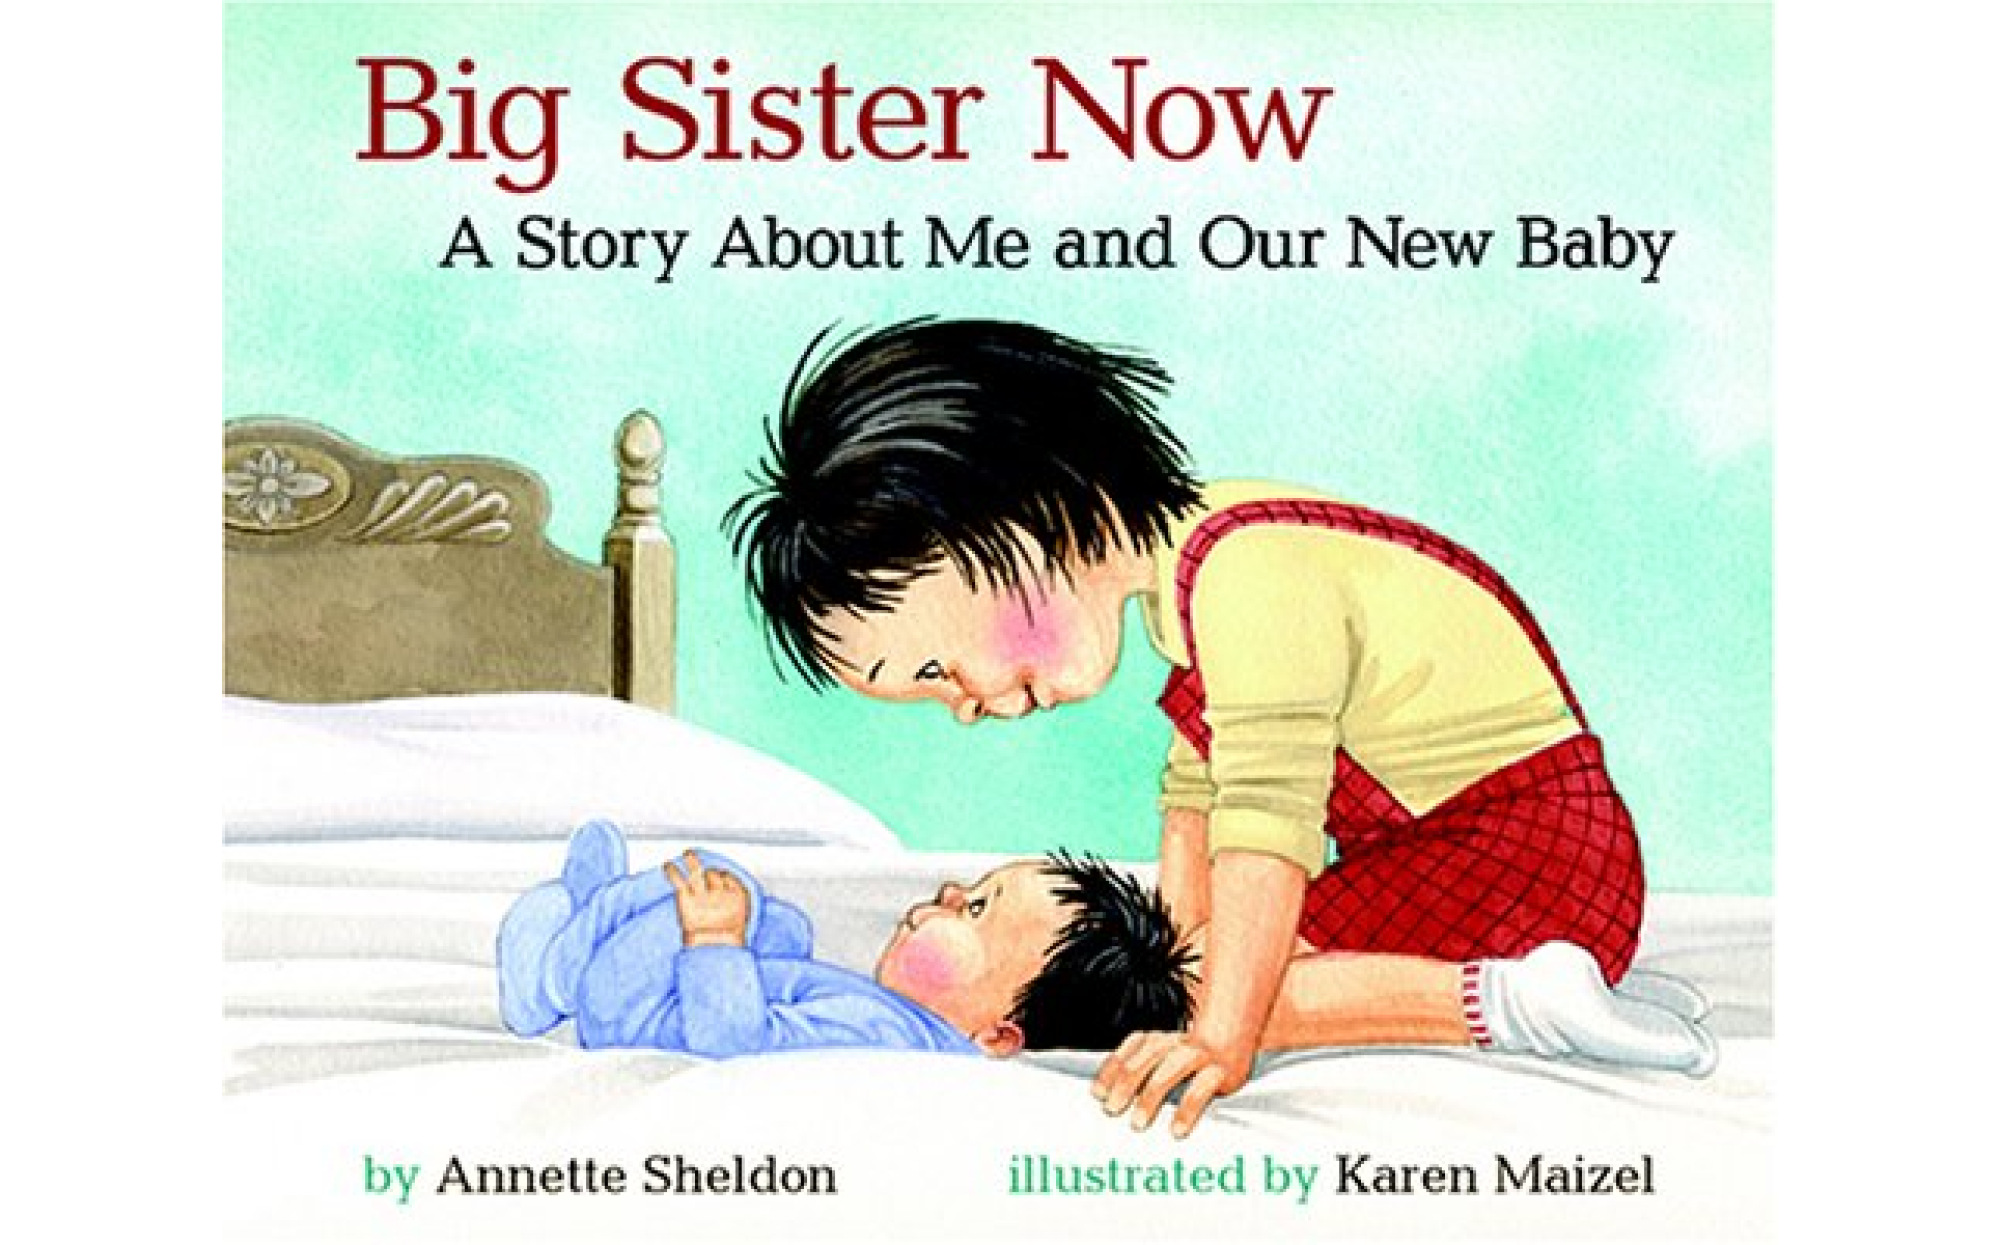 I’m A Big Sister Now by Katura J. Hudson